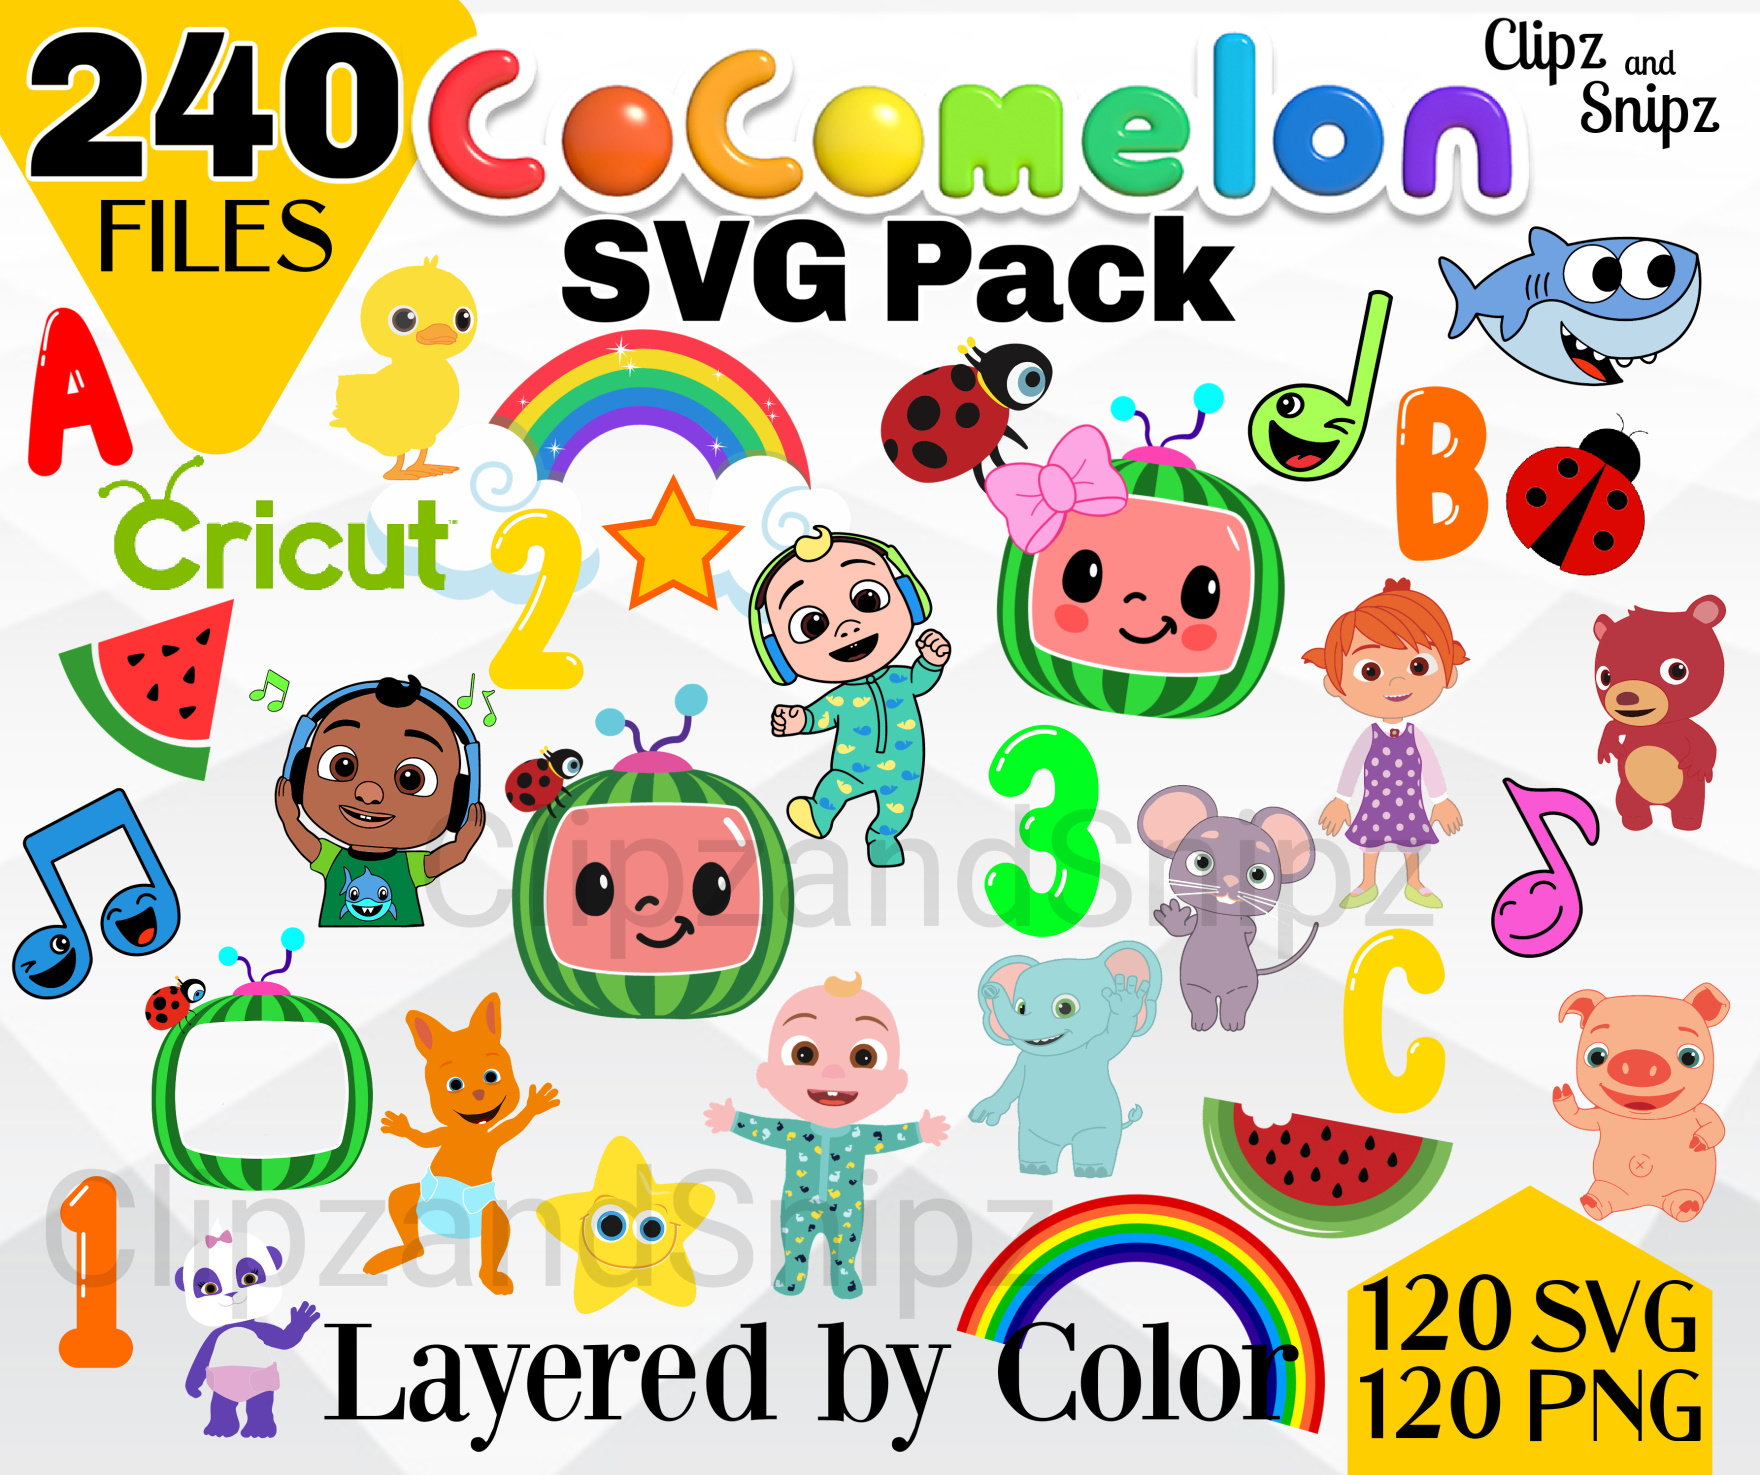 Cocomelon SVG Layered Images PNG Clipart SVG Instant Digital - Etsy UK